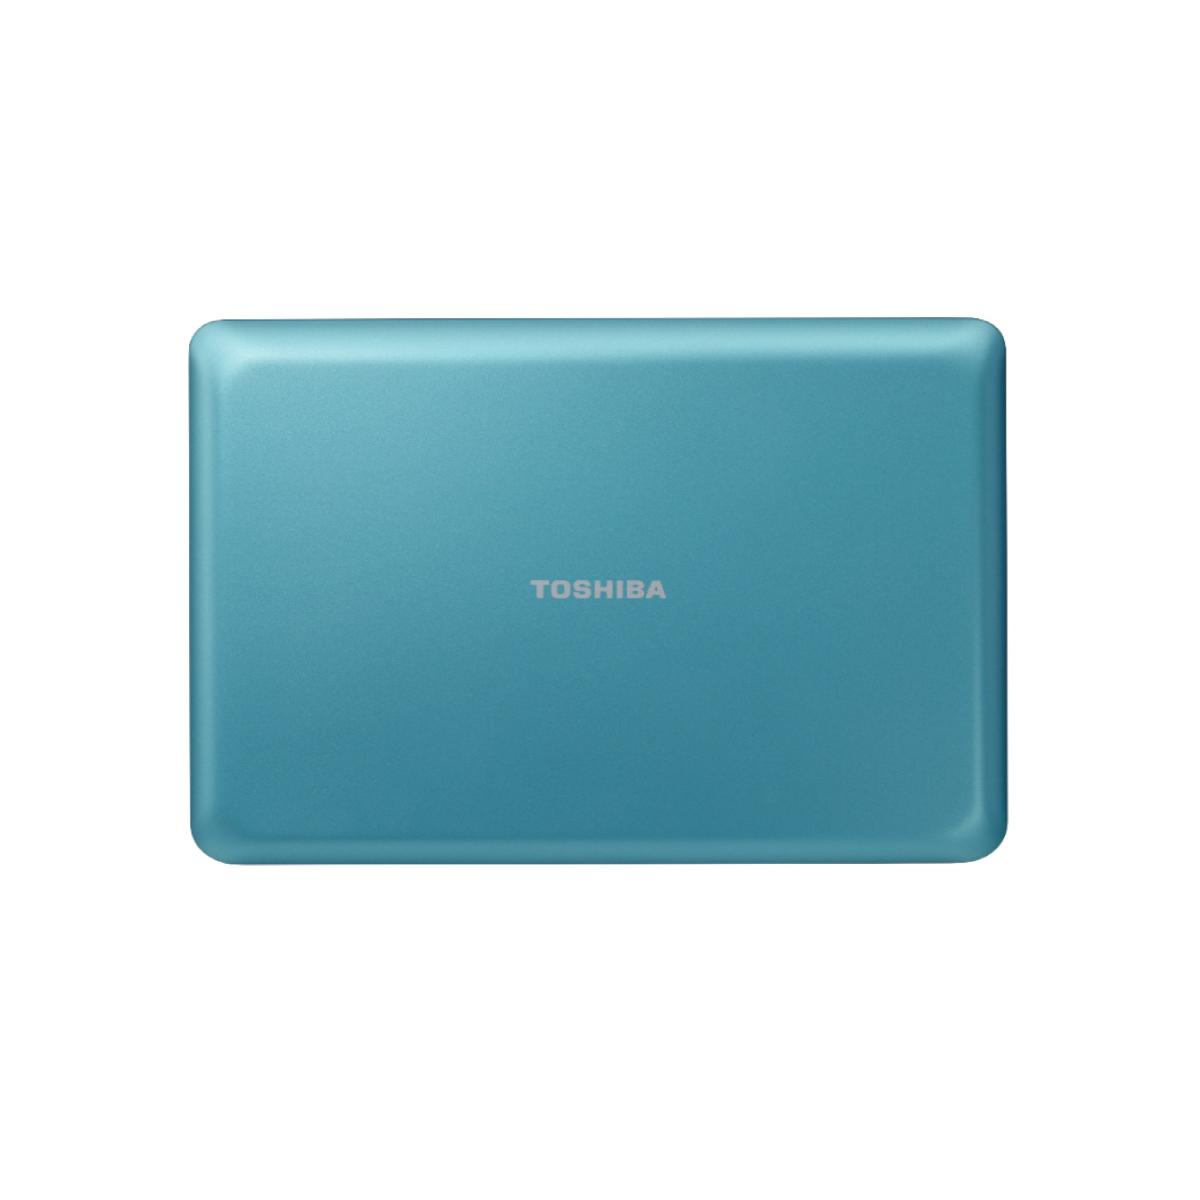 Toshiba Regza ポータブルDVDプレーヤー SD-P710SG